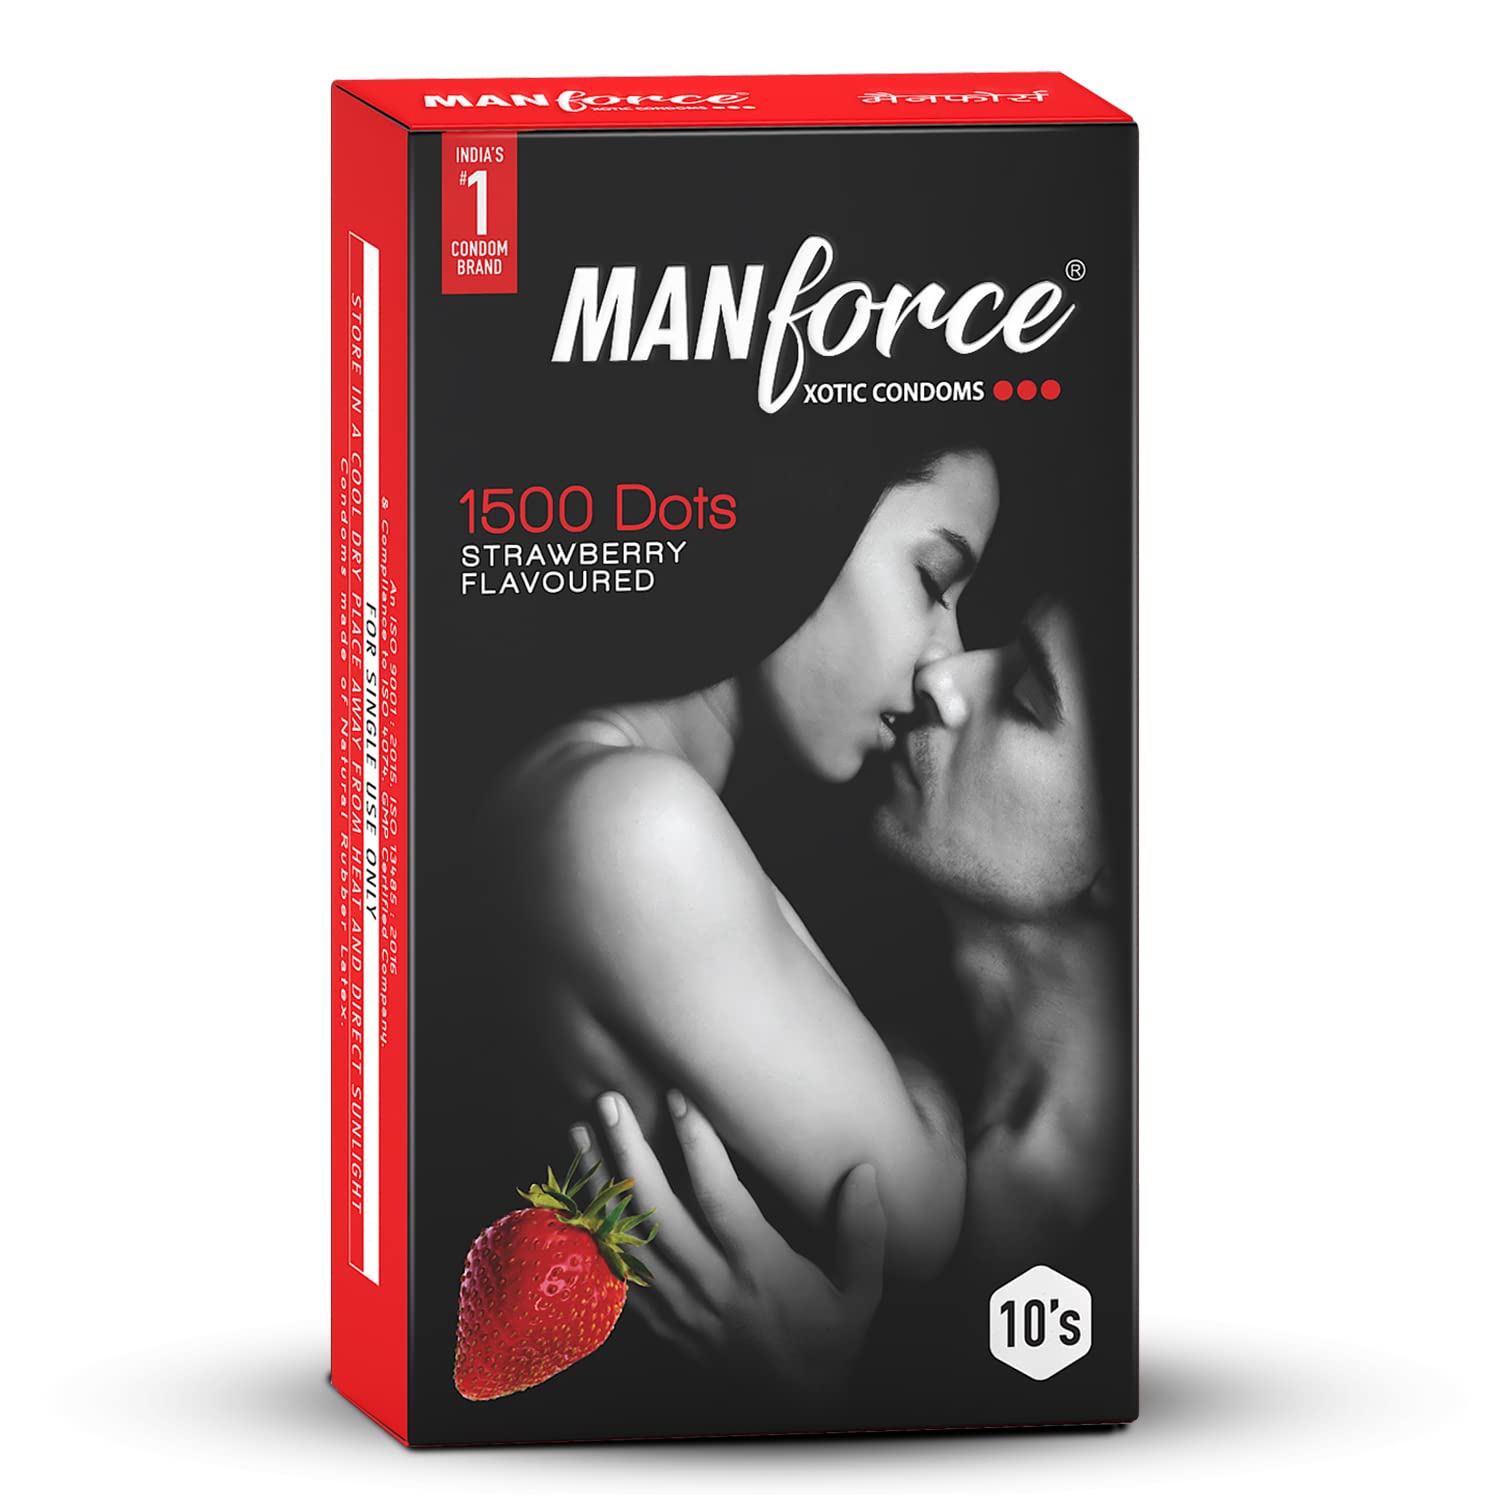 Manforce Gel Used In Xxx Videos - Manforce 1500 Dots Strawberry Flavoured Xotic Premium Condoms Pack Of 10 -  Jeevandip